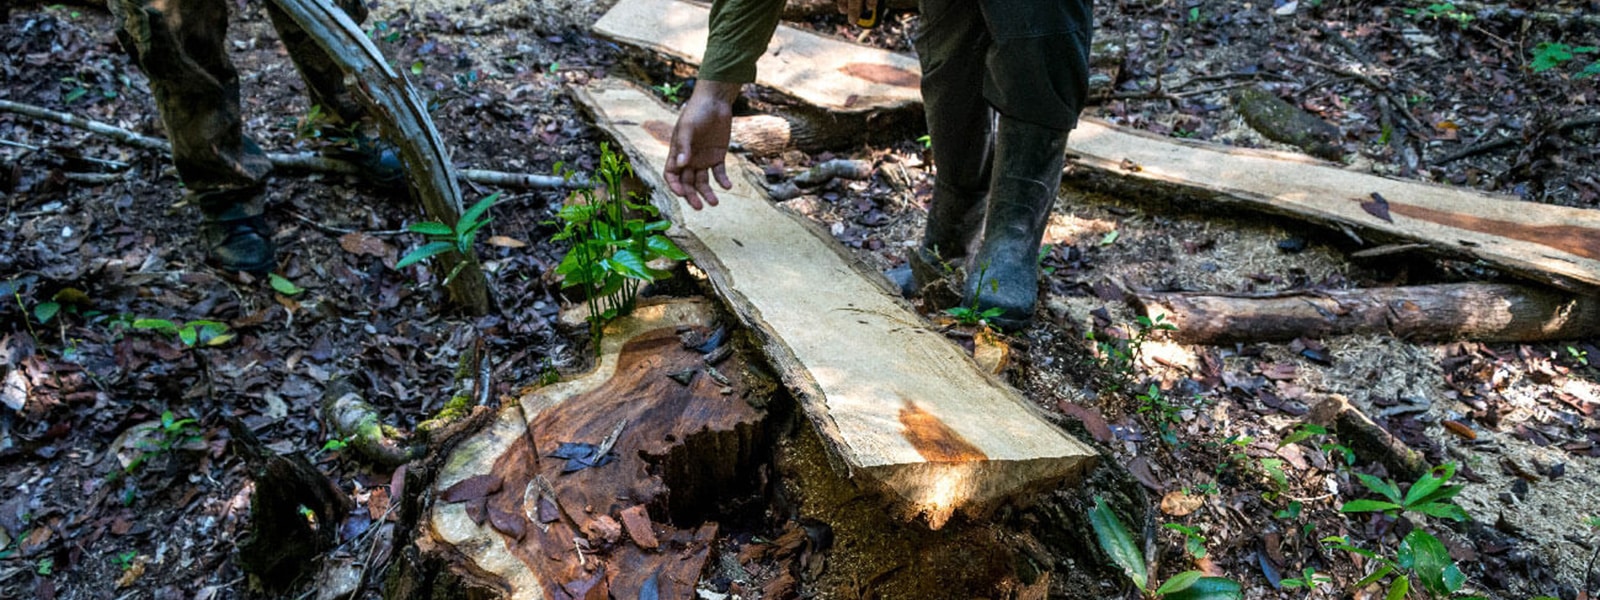 Investigacion tala ilegal en la frontera guatemala mexico selva maya granadillo madera